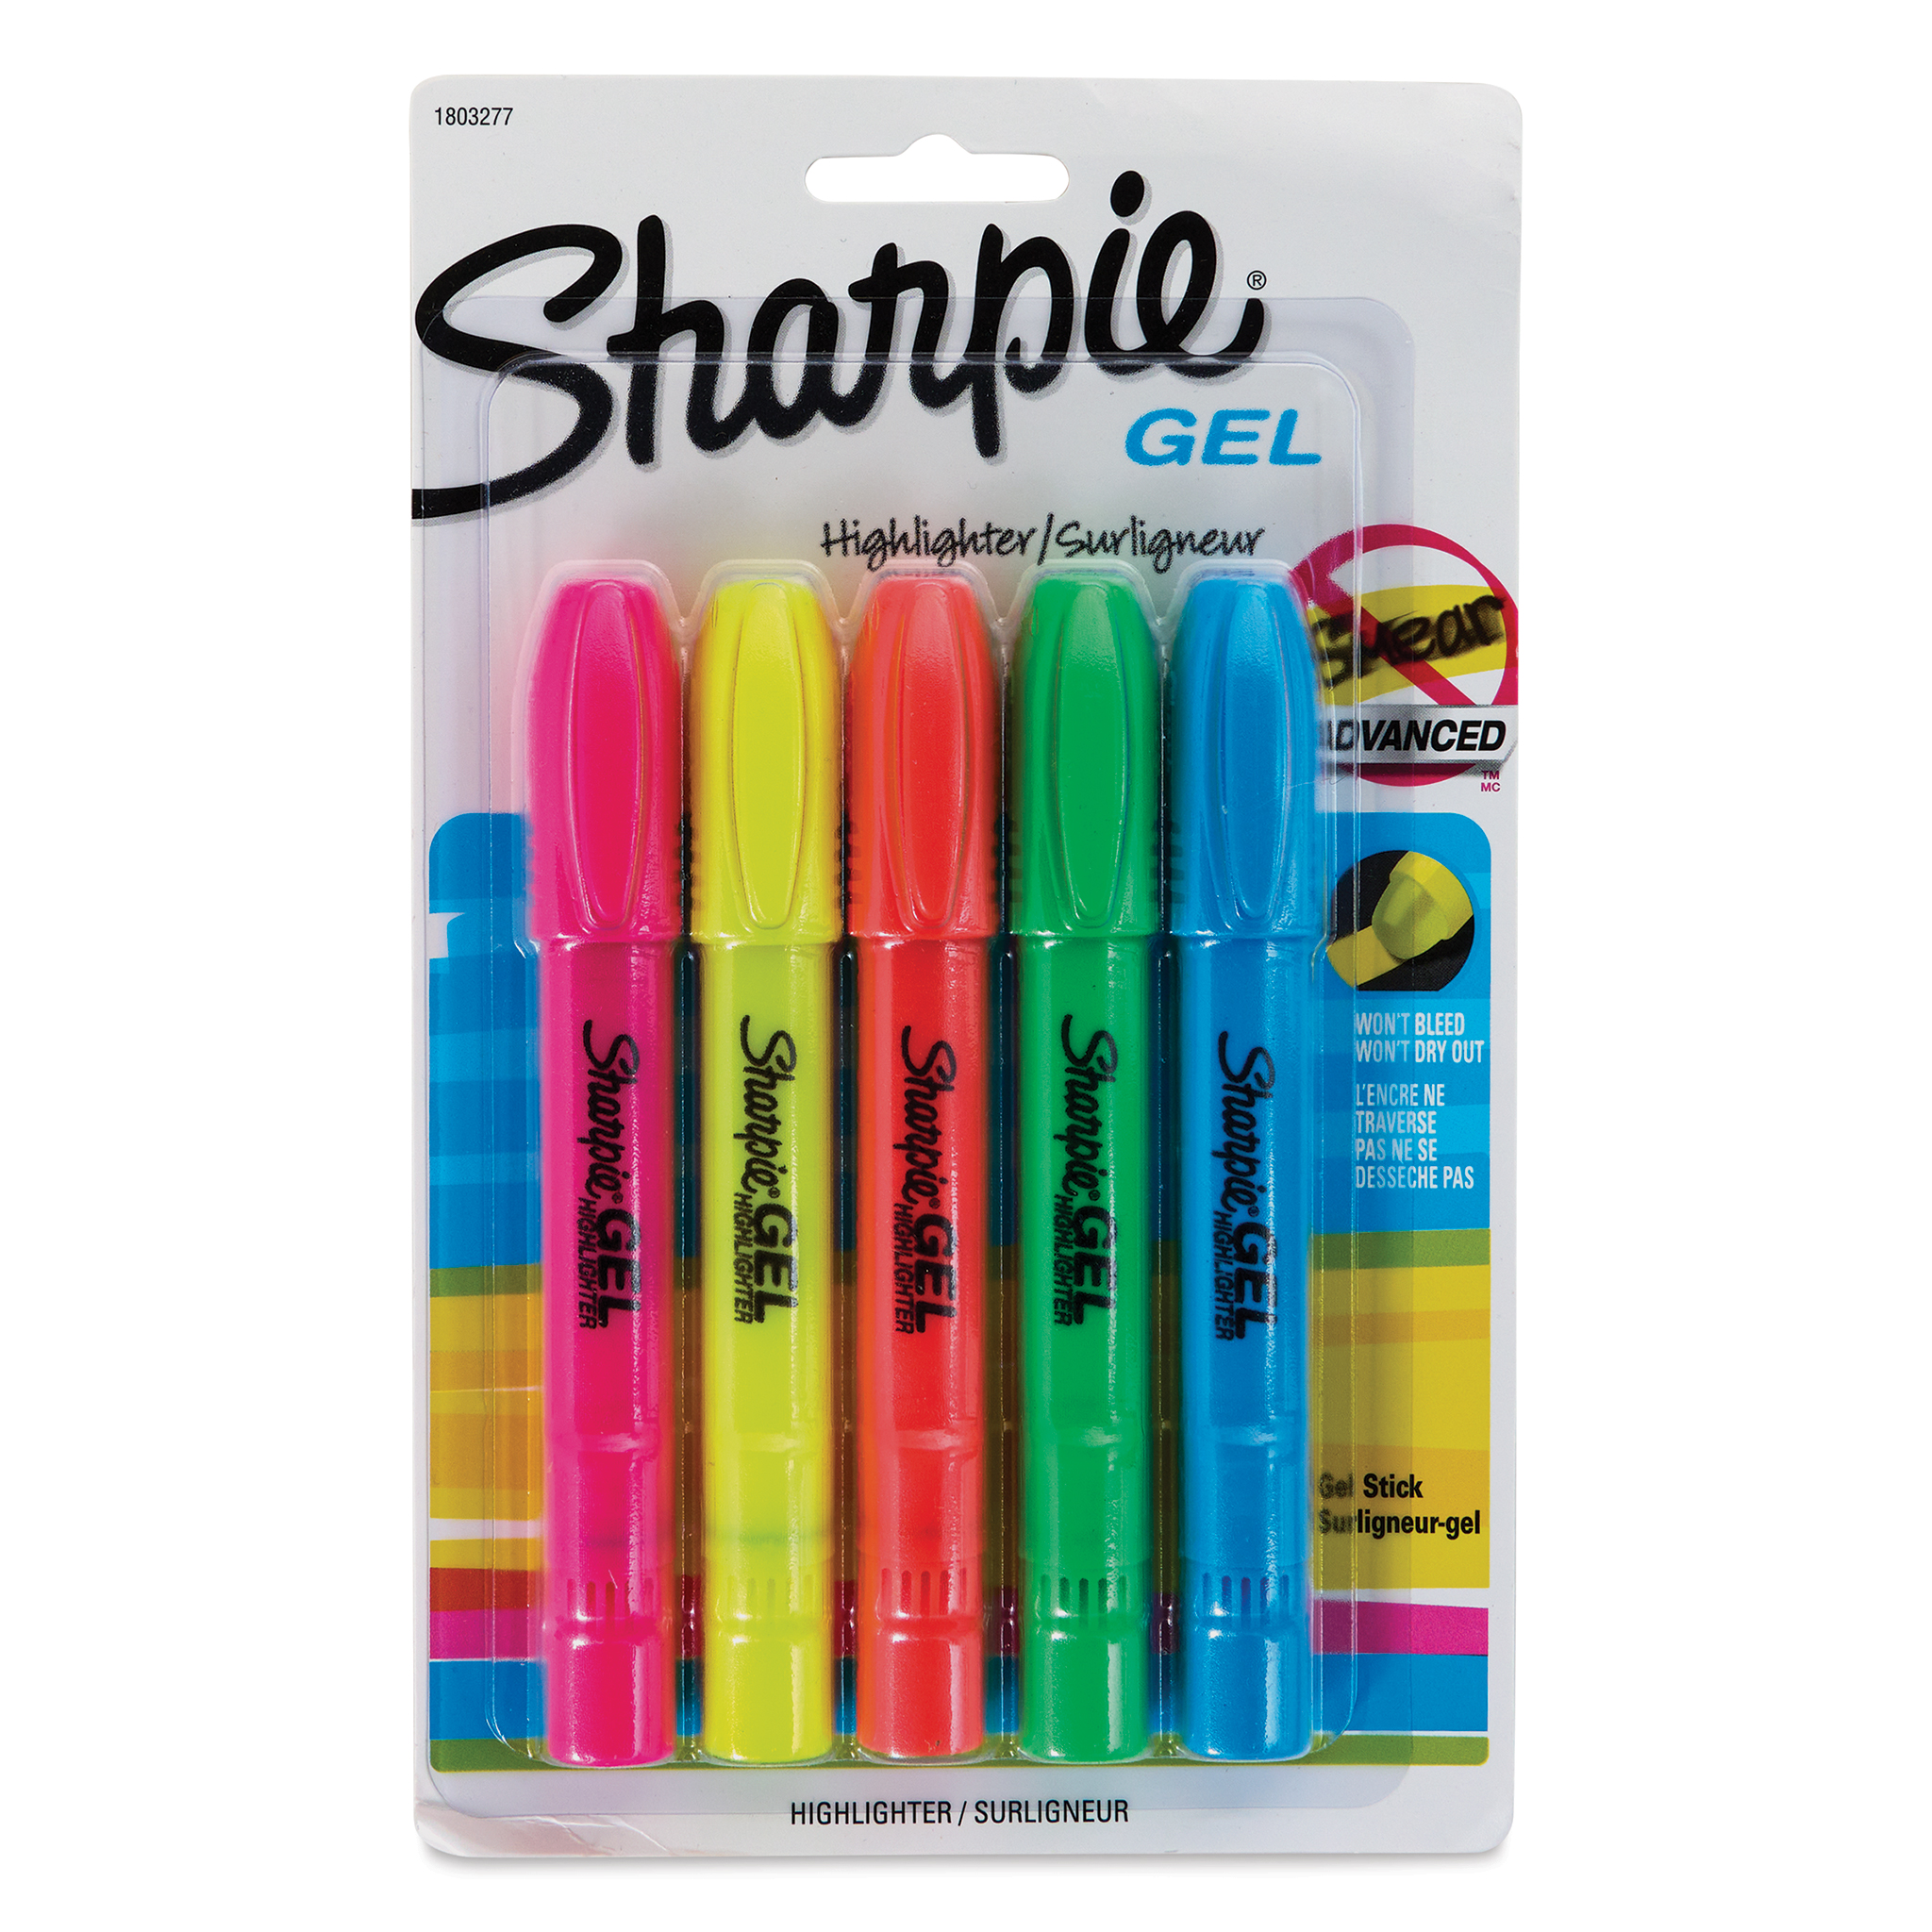 Sharpie 1803277 Gel Highlighter, Assorted Colors, 5 per Pack 